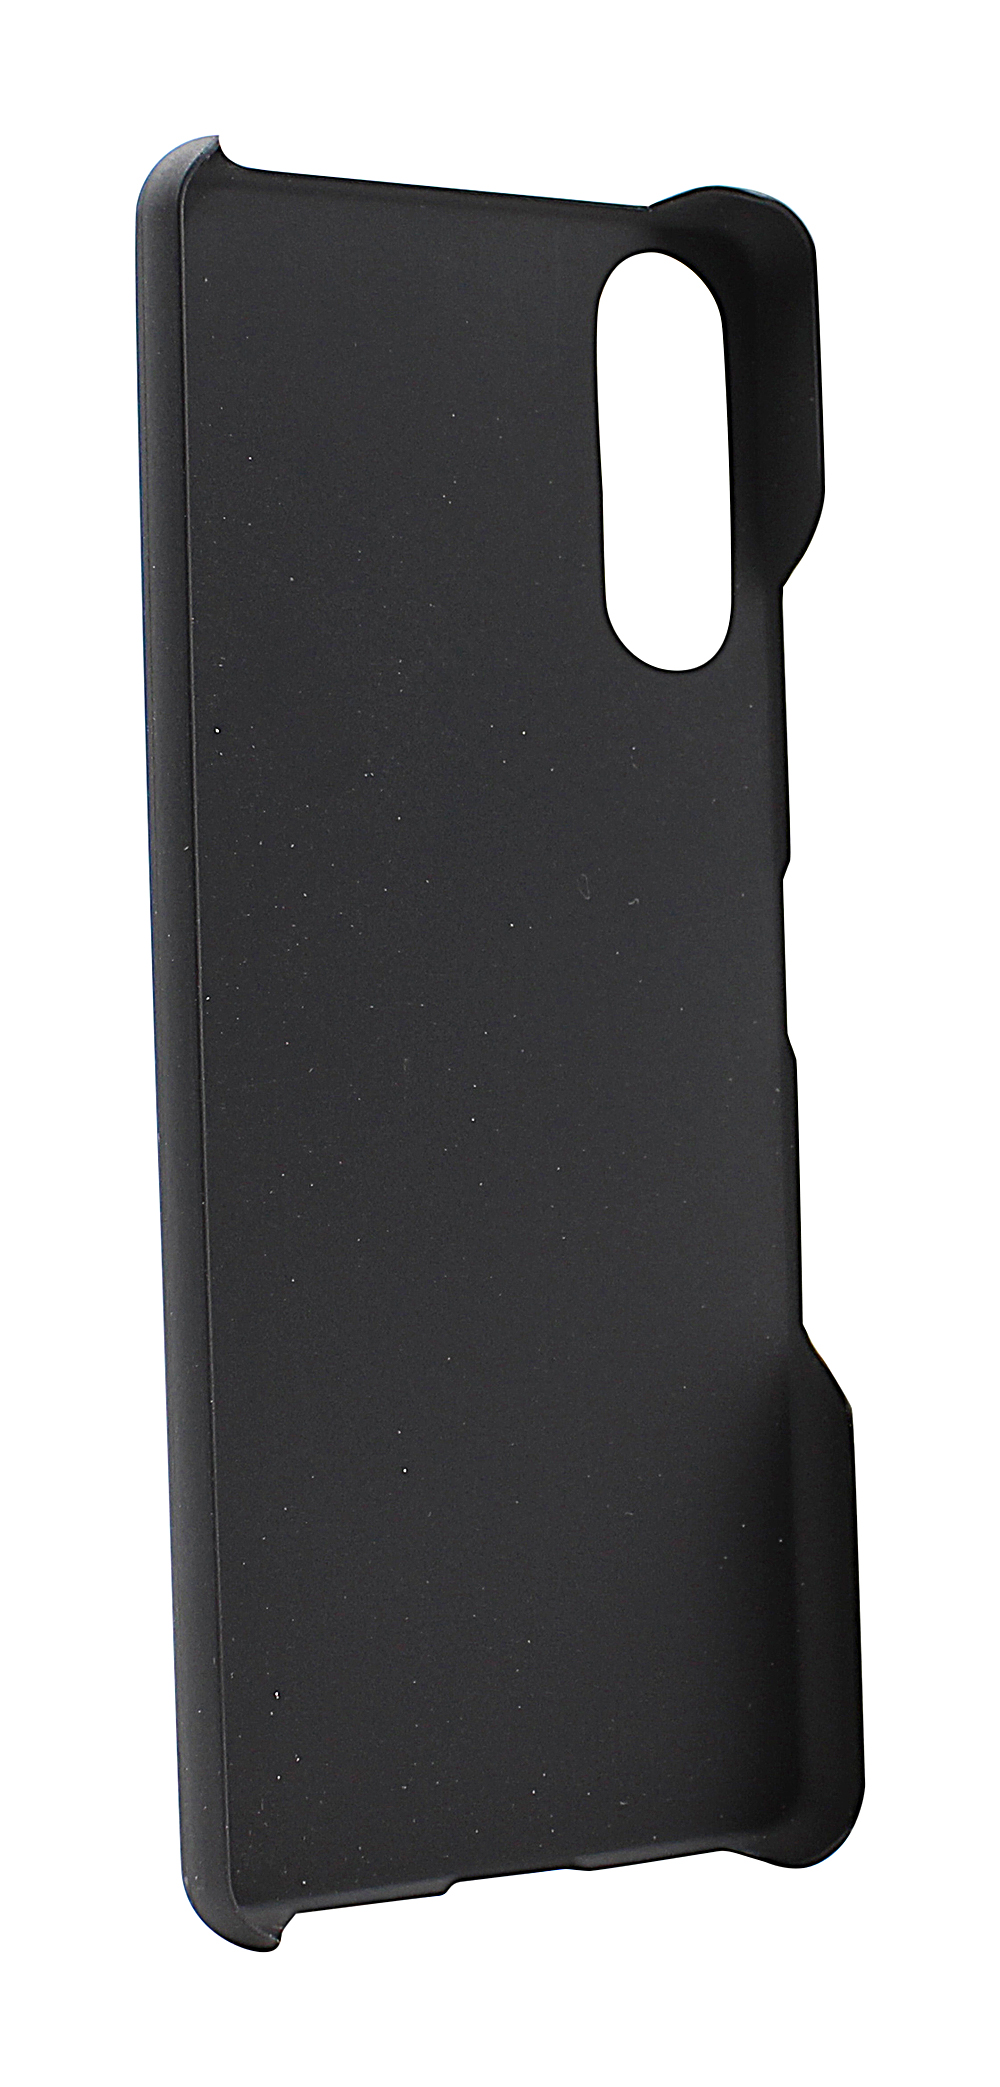 Skimblocker Magnet Designwallet Sony Xperia 10 III (XQ-BT52)